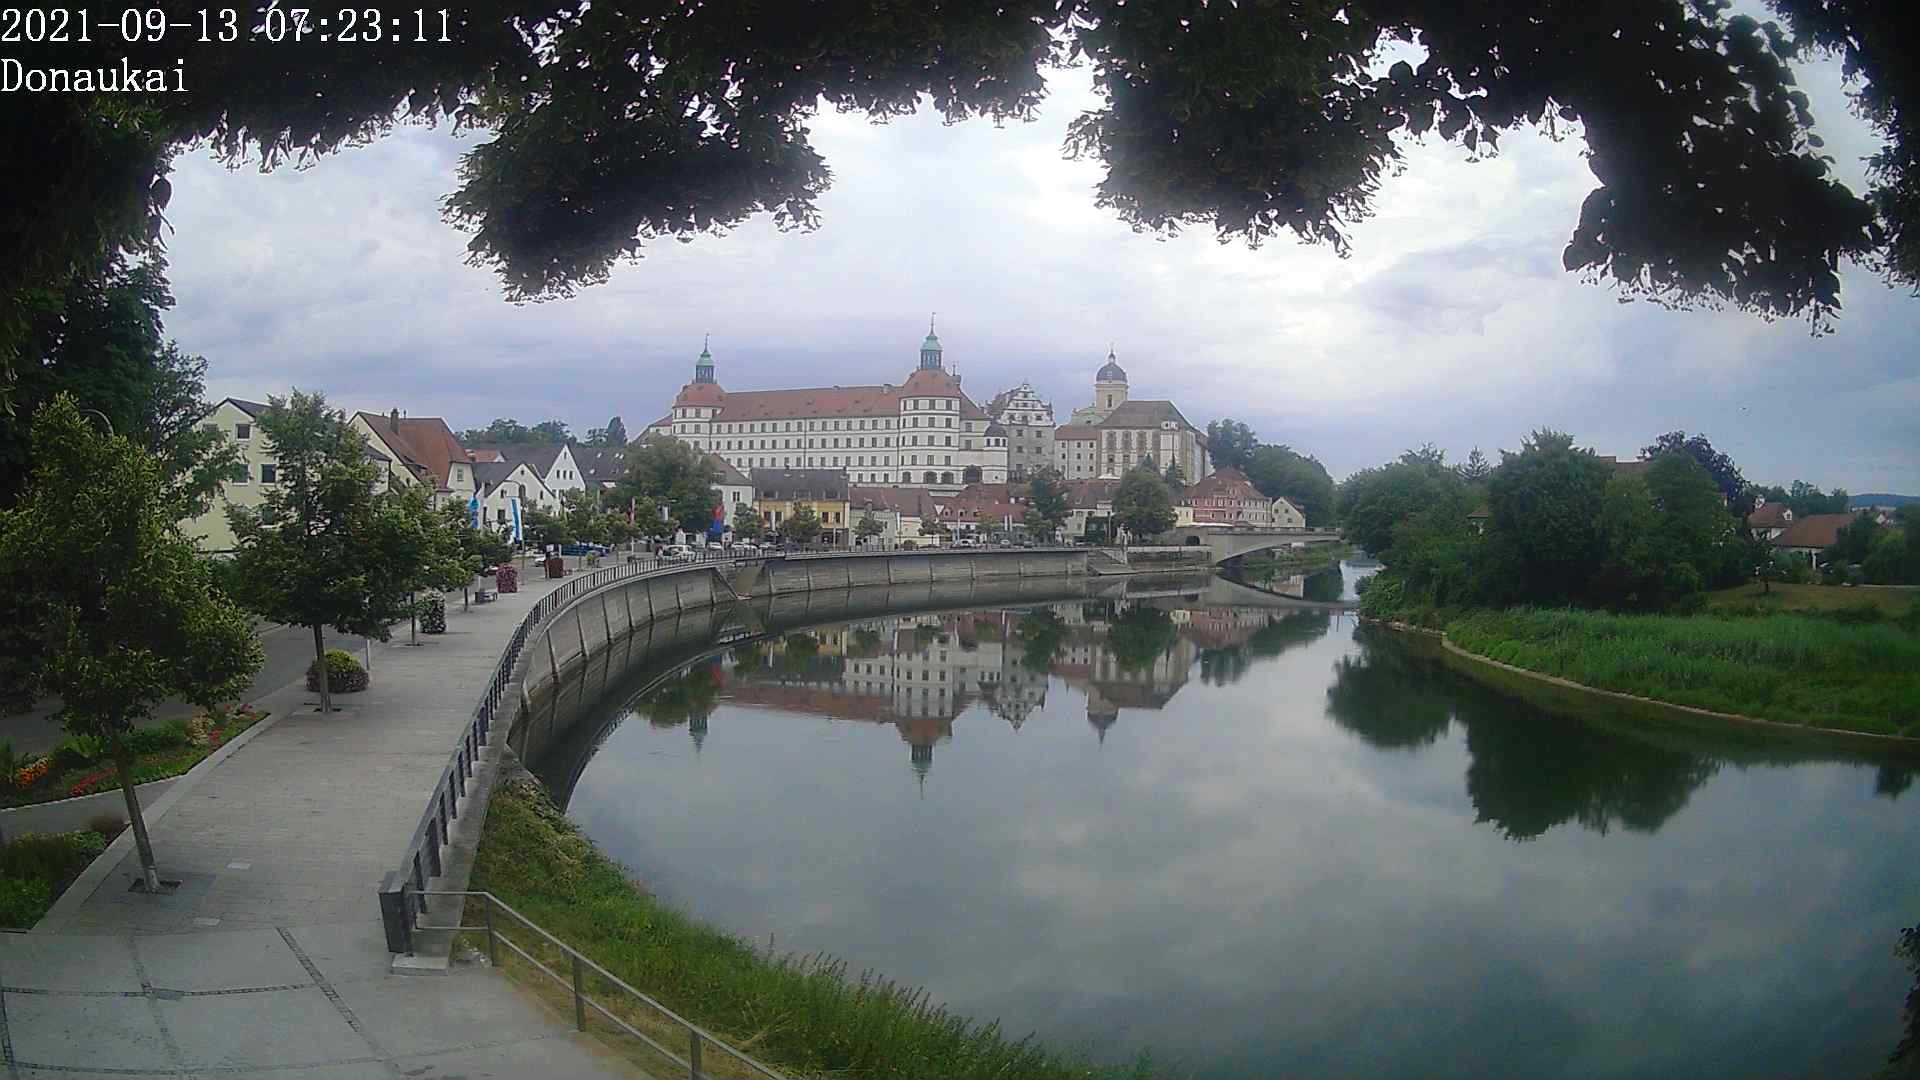 Donaukai